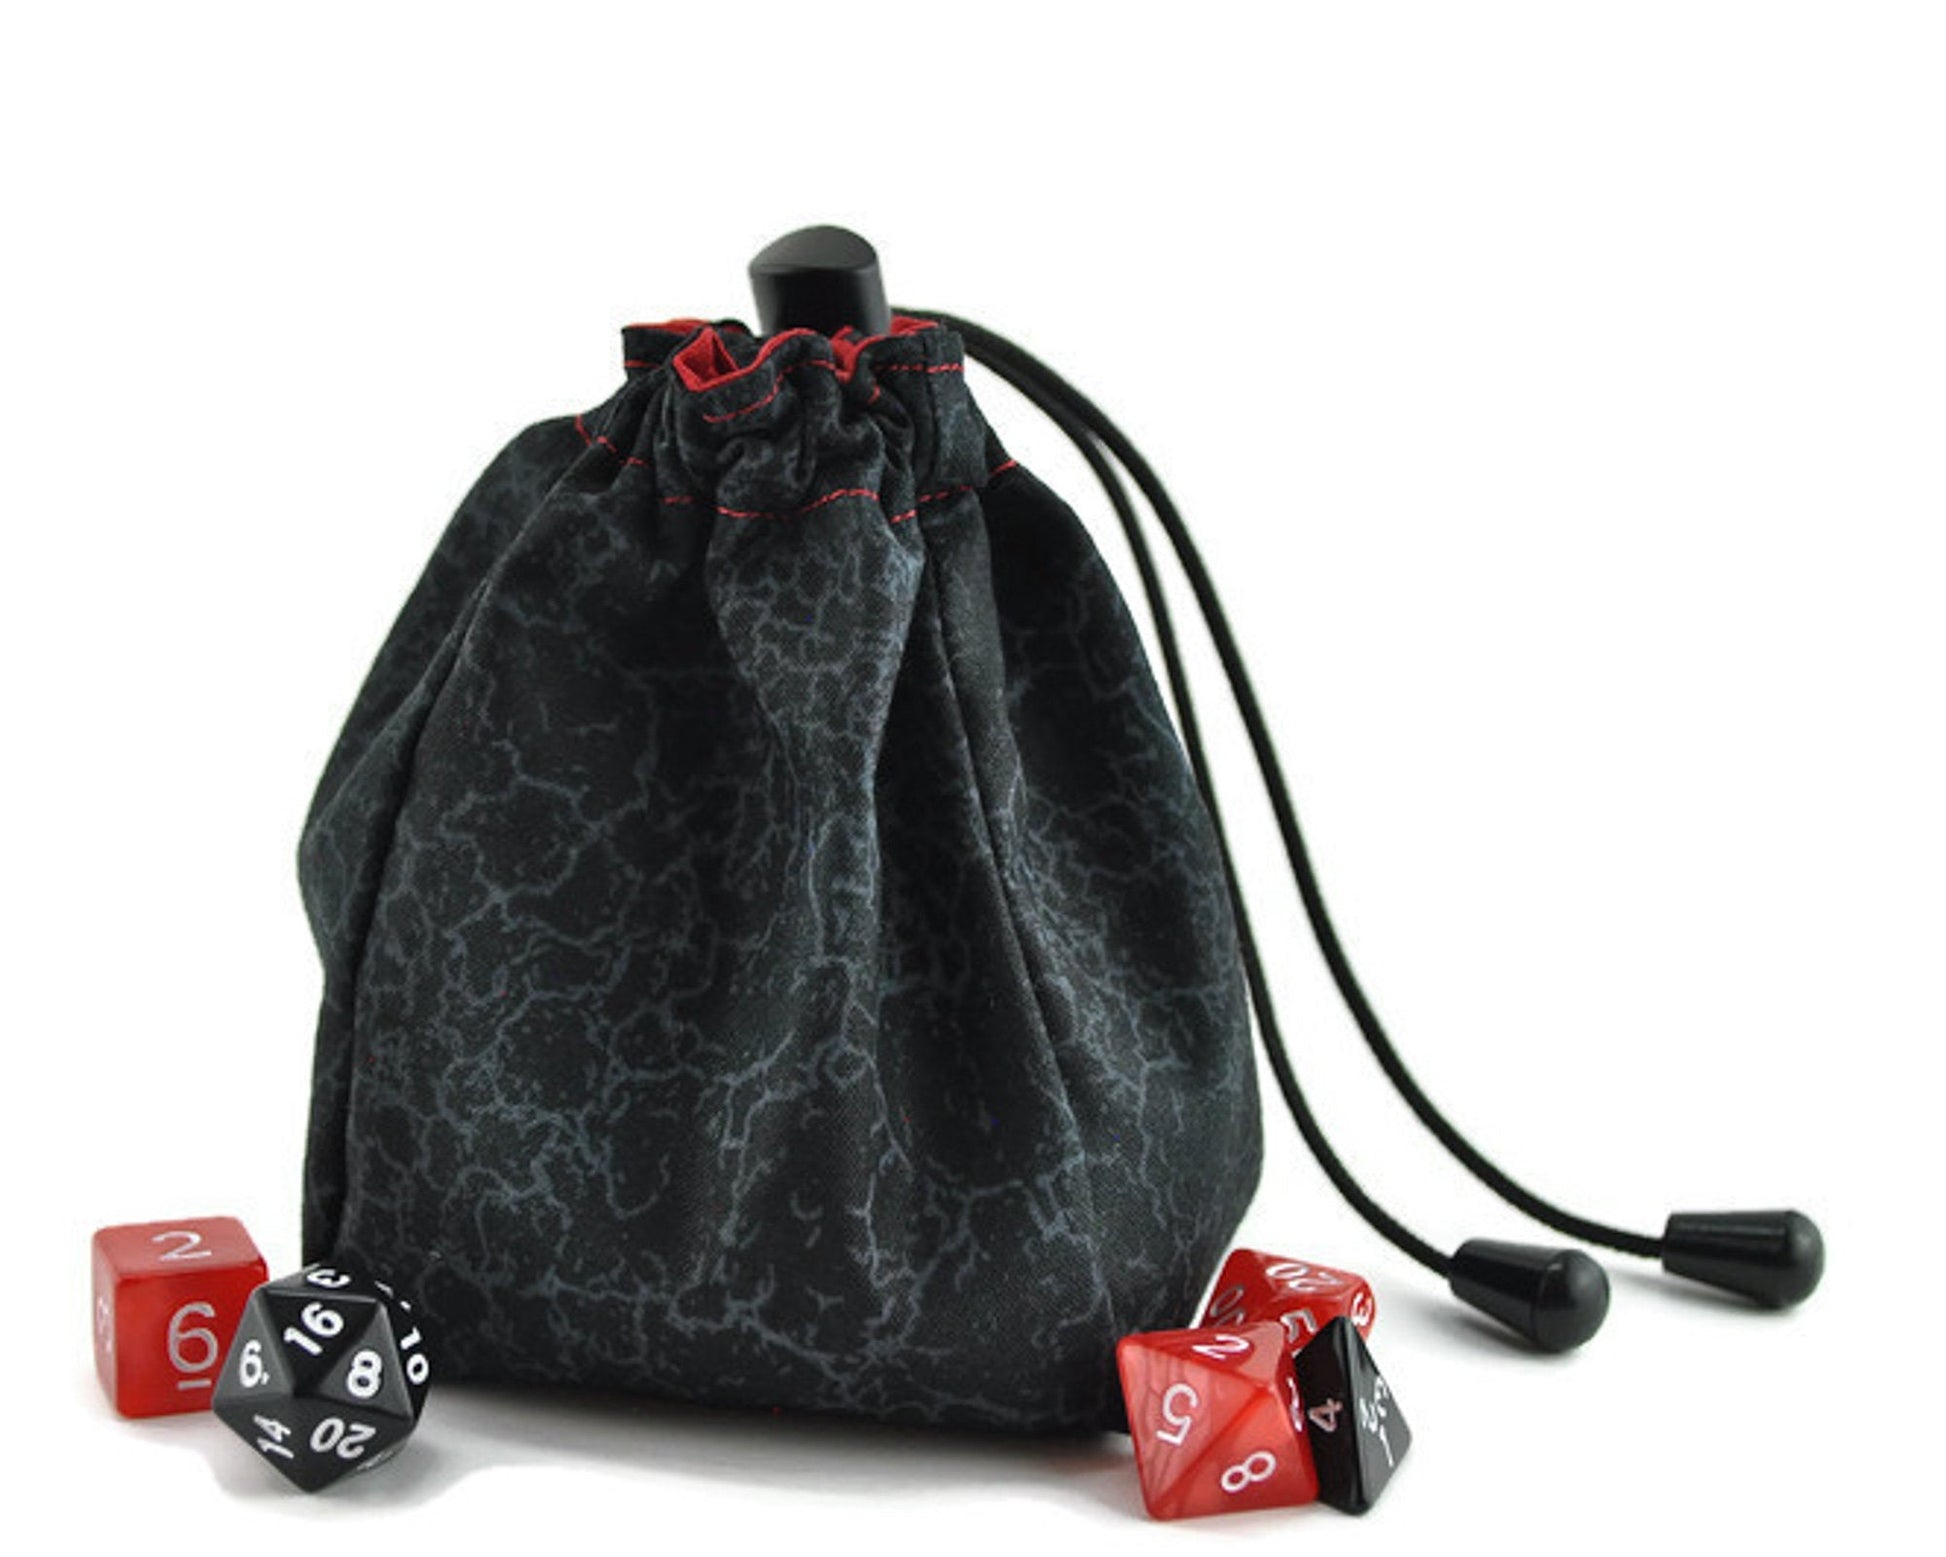 Neutral Evil Dice Bag, Red and Black - Rowan Gate